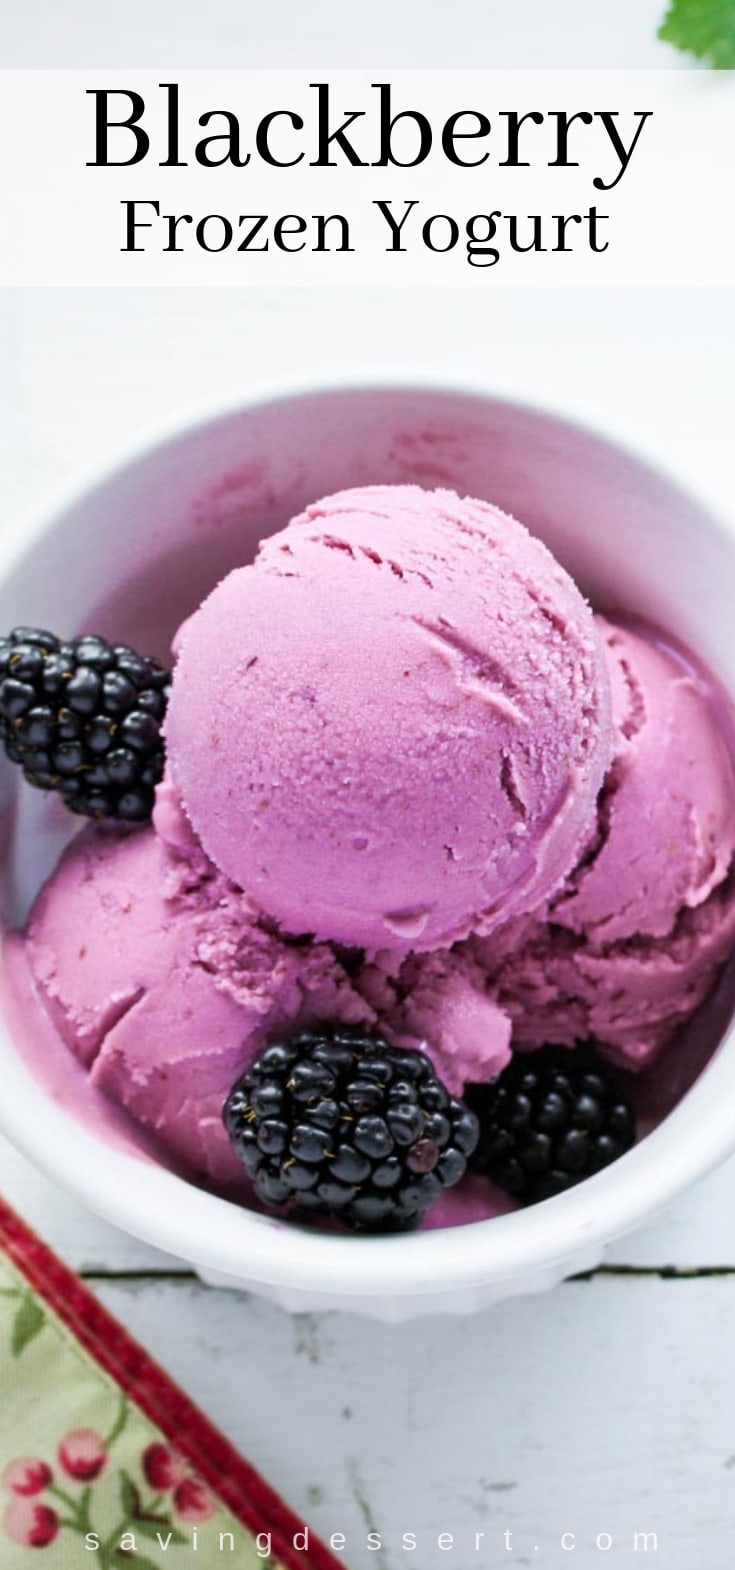 A bowl of purple hued blackberry frozen yogurt with fresh blackberries